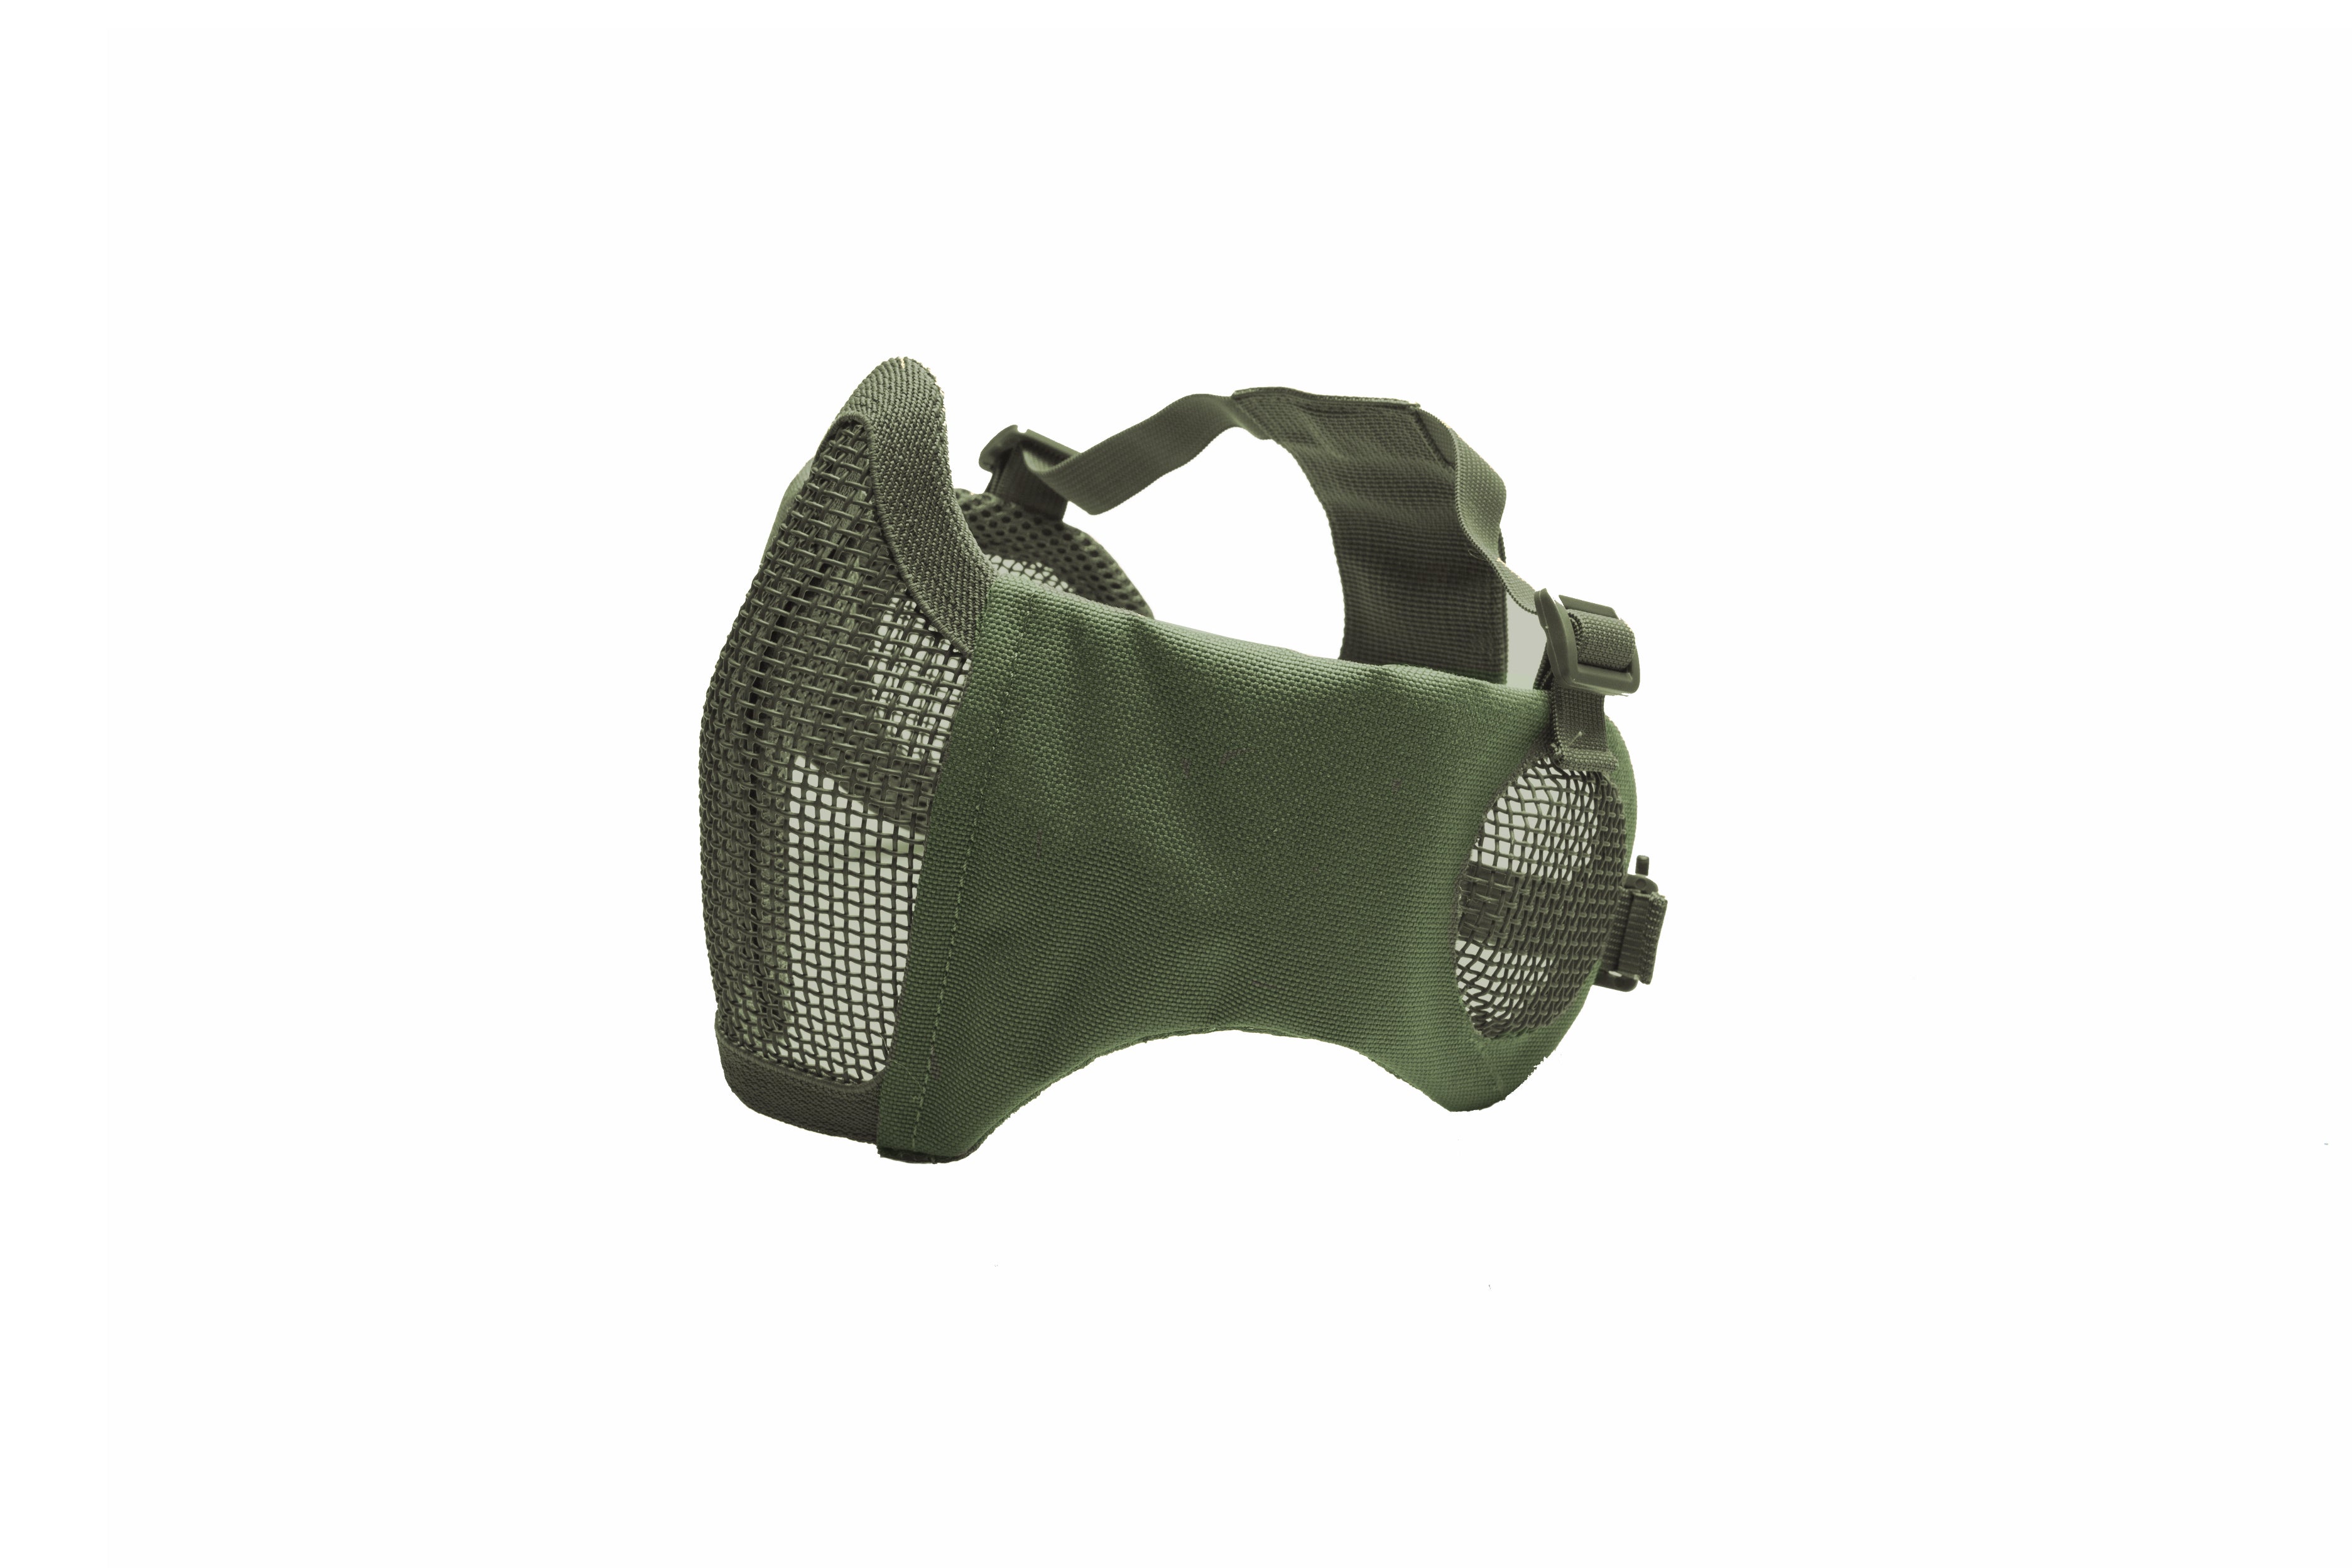 ASG Metal Mesh Airsoft Mask w/ Cheekpad Ear Protection – OD Green